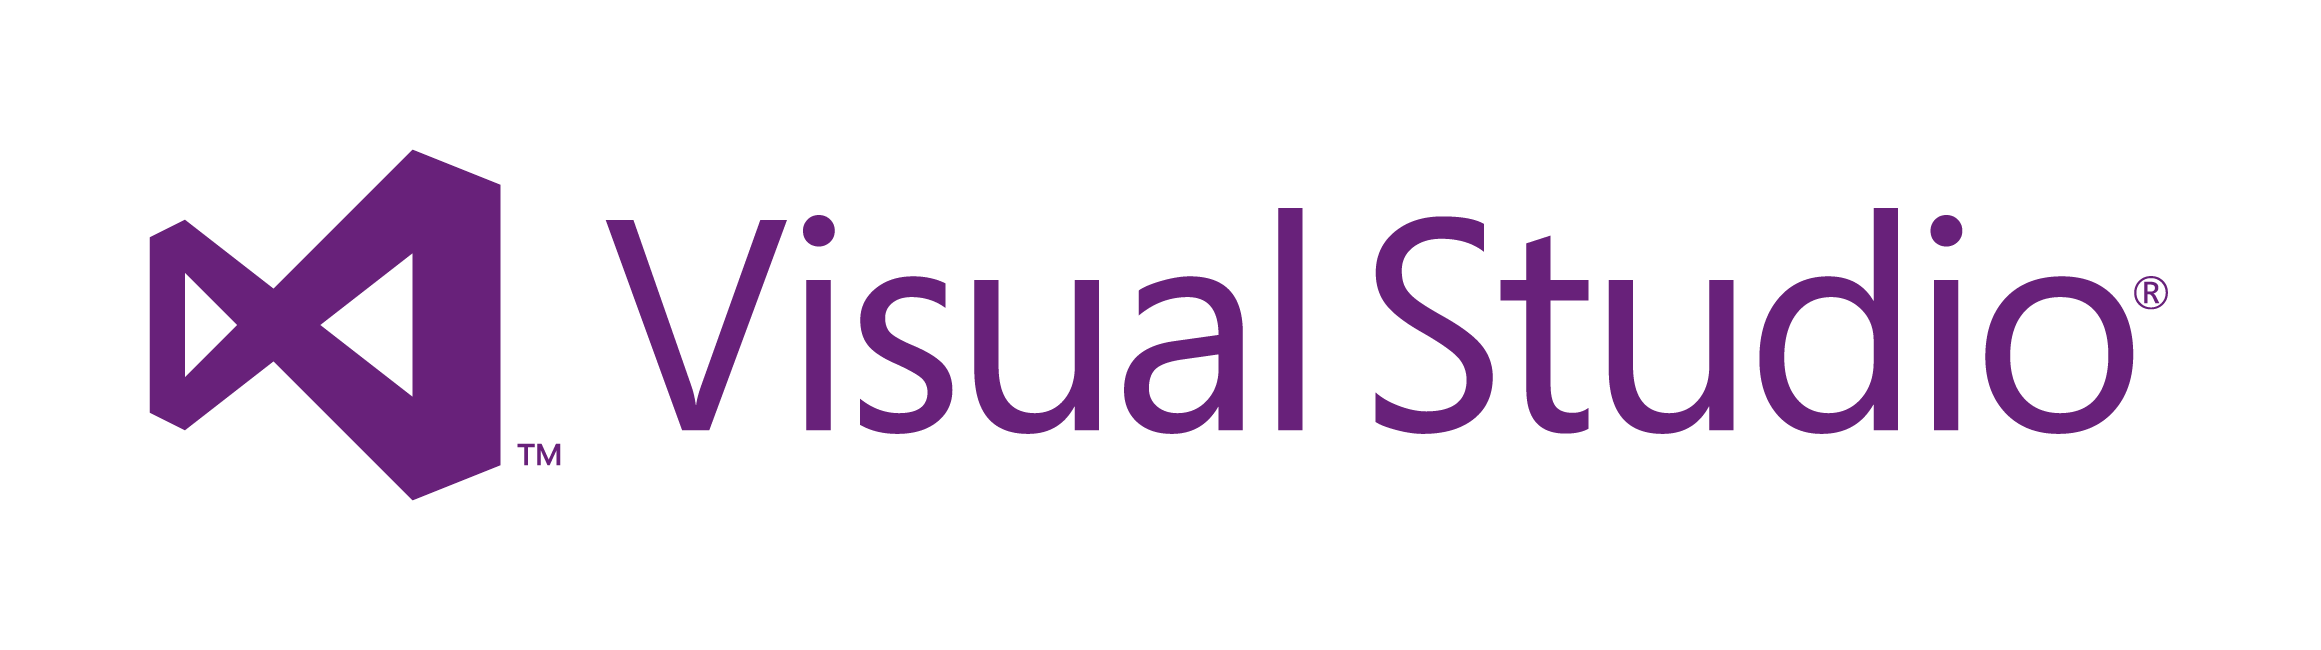 visual studio 2012 logo